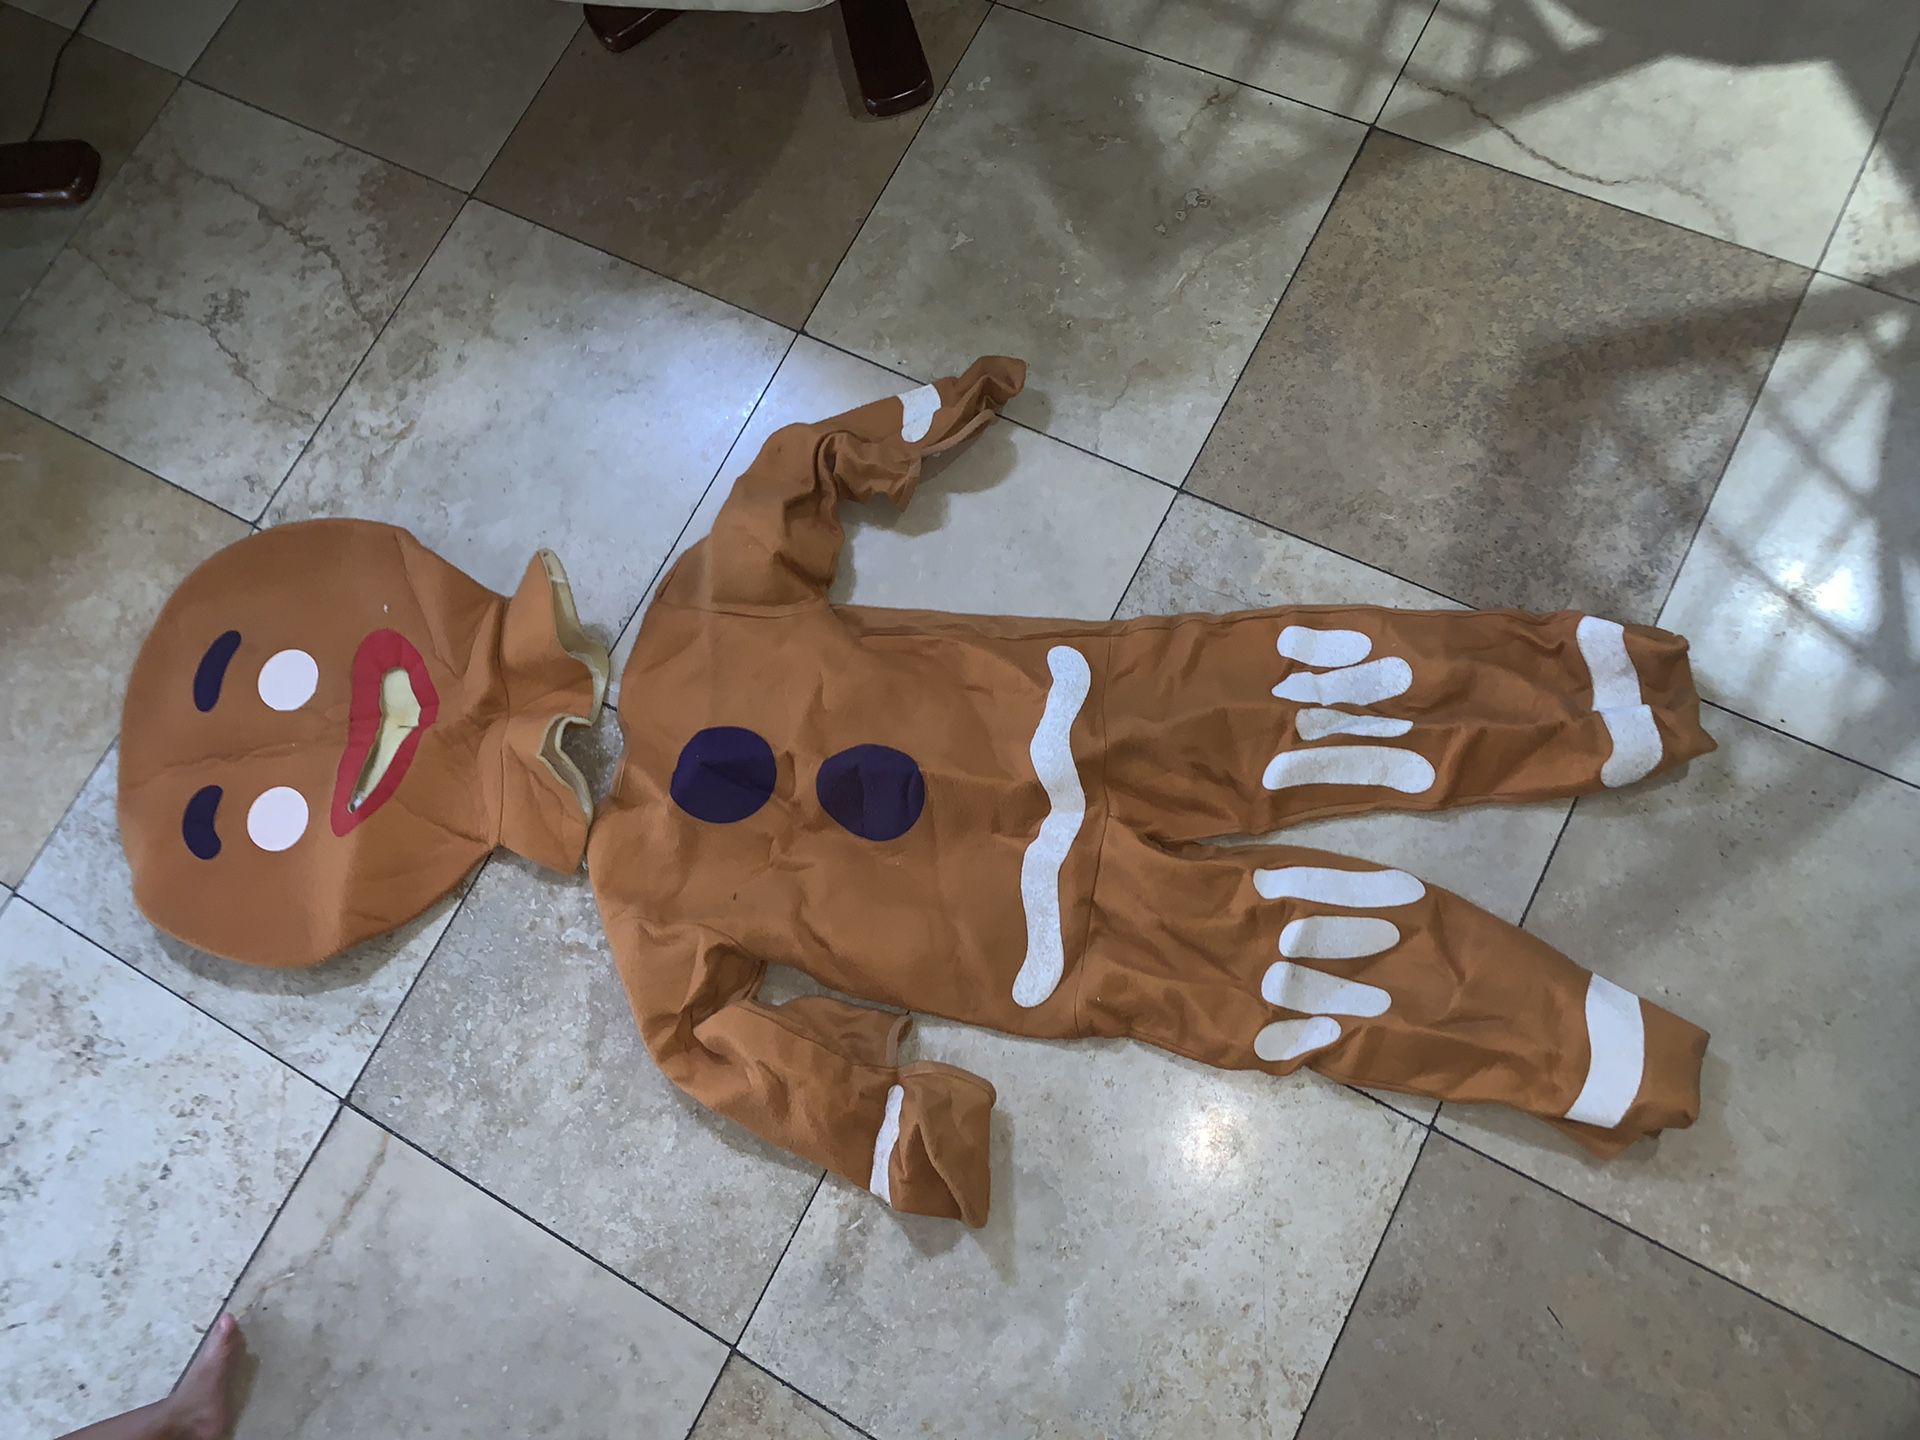 Gingerbread man from shrek